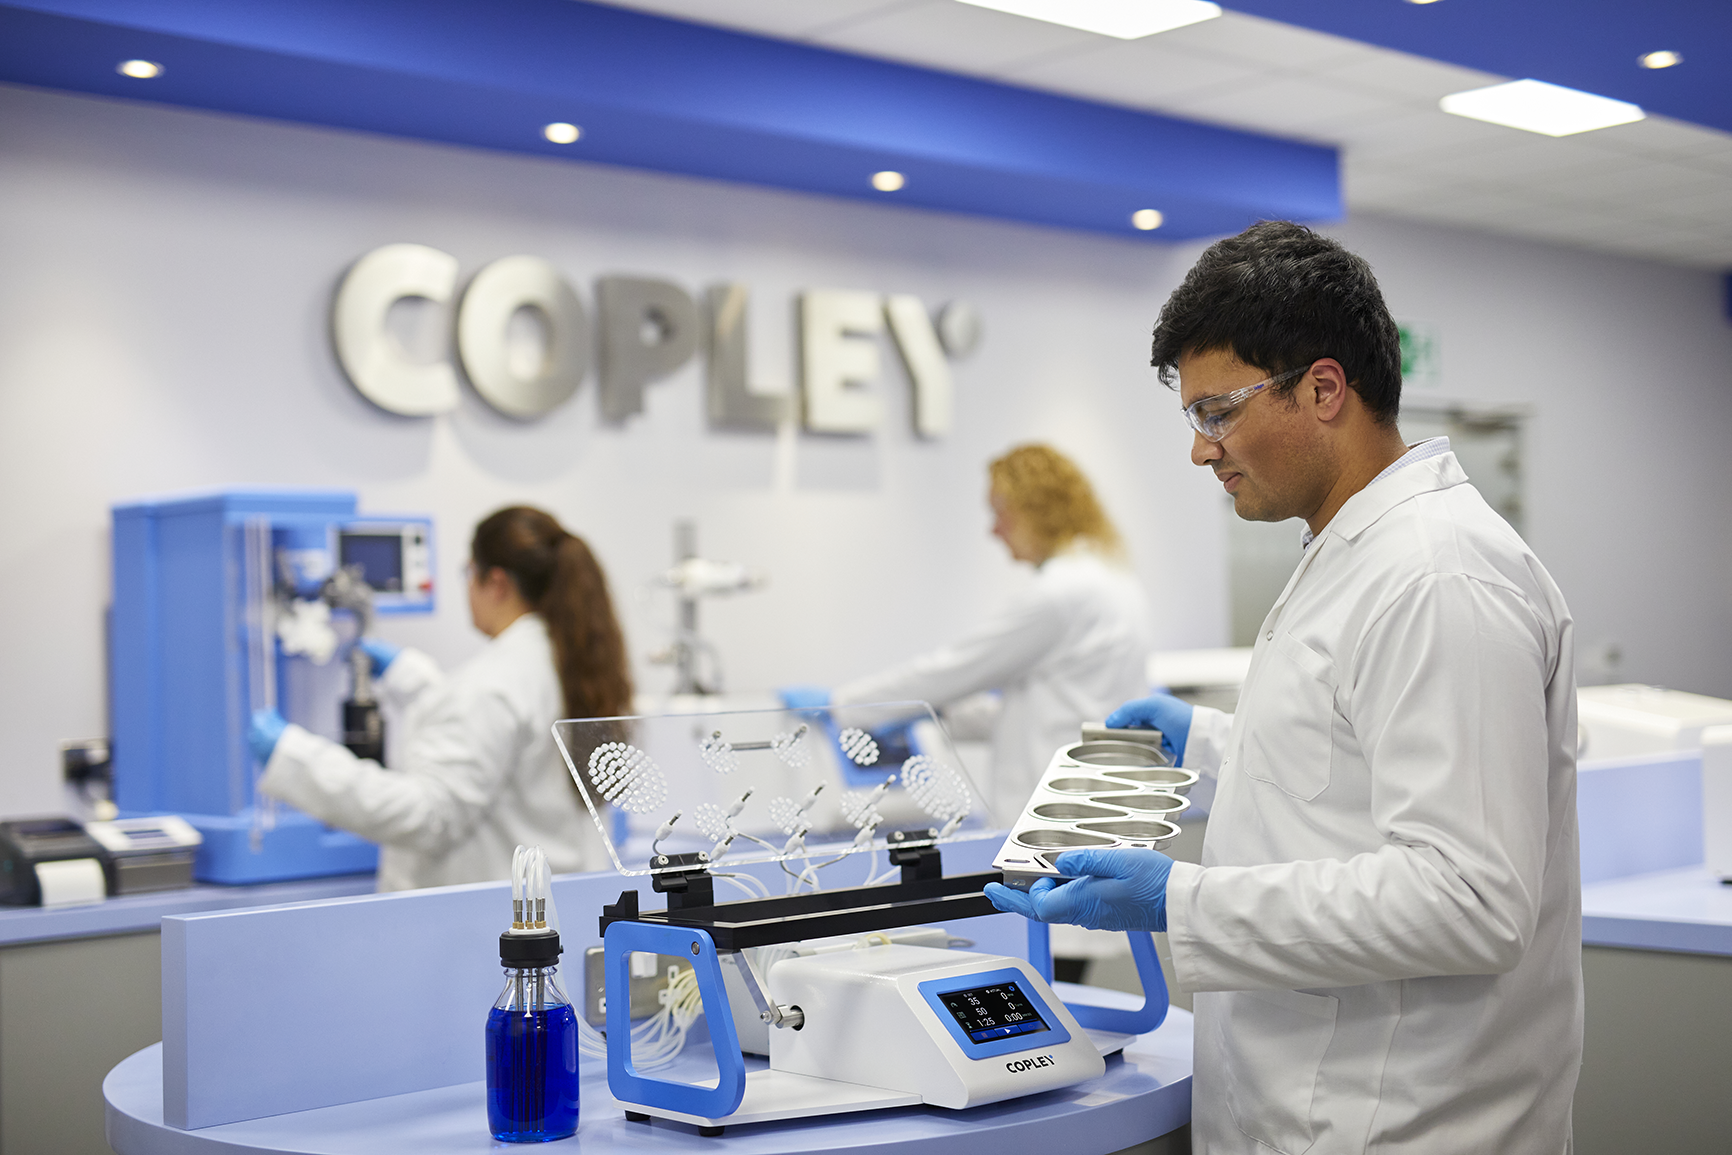 Copley Inhaler Testing Product Updates 2021